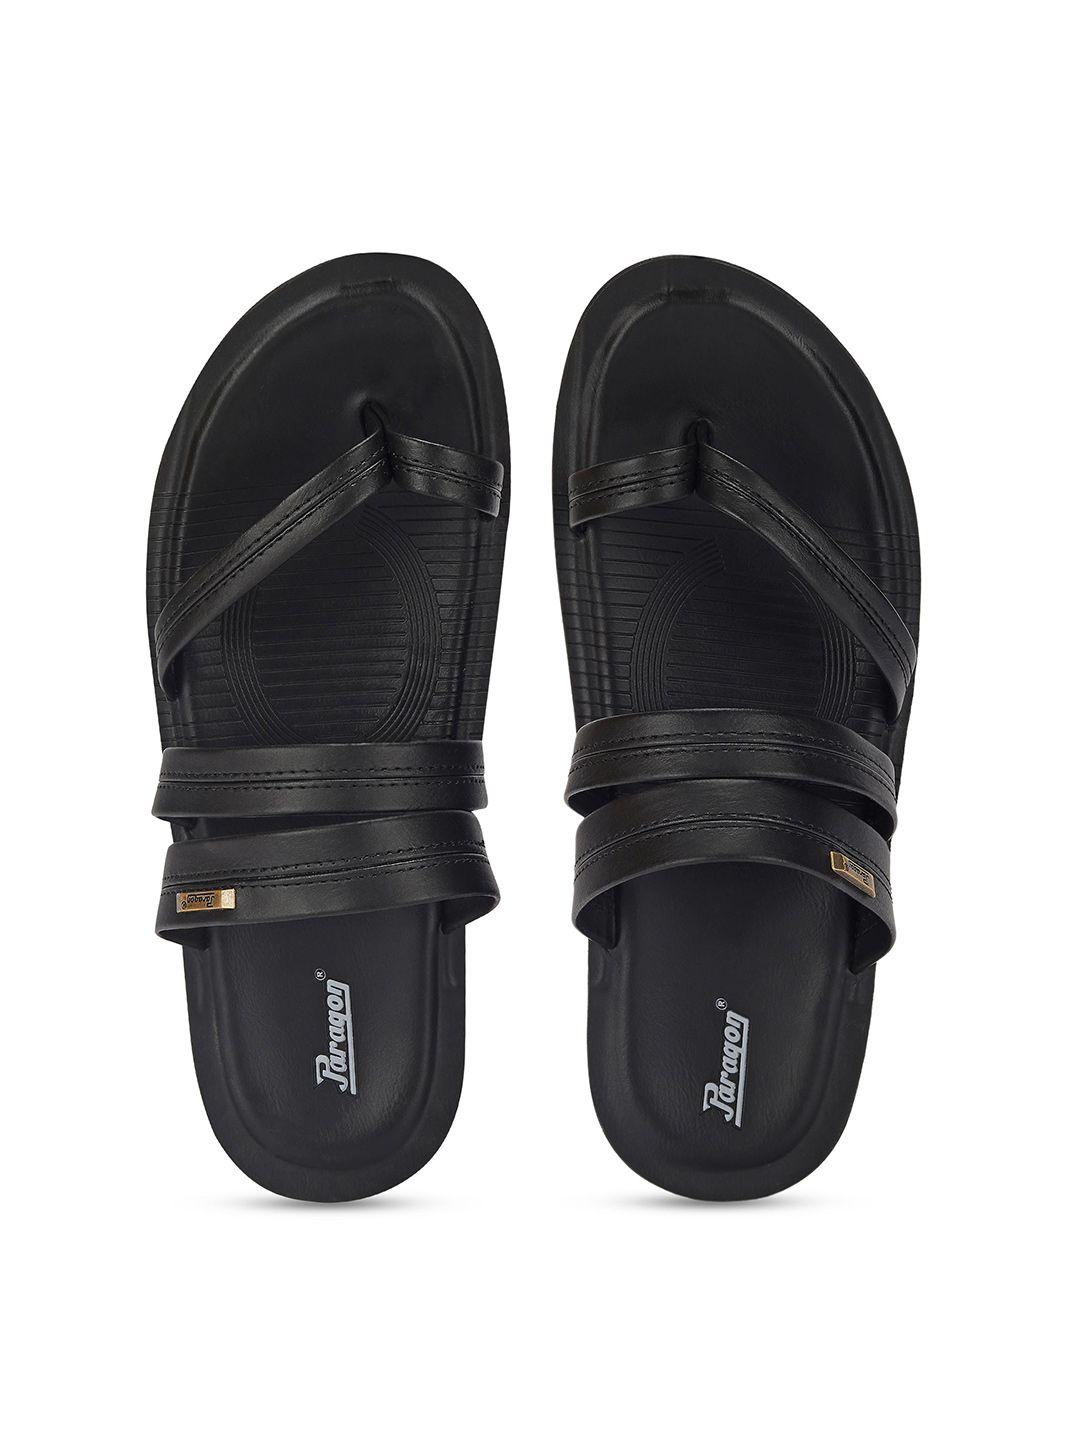 paragon textured comfort sandals